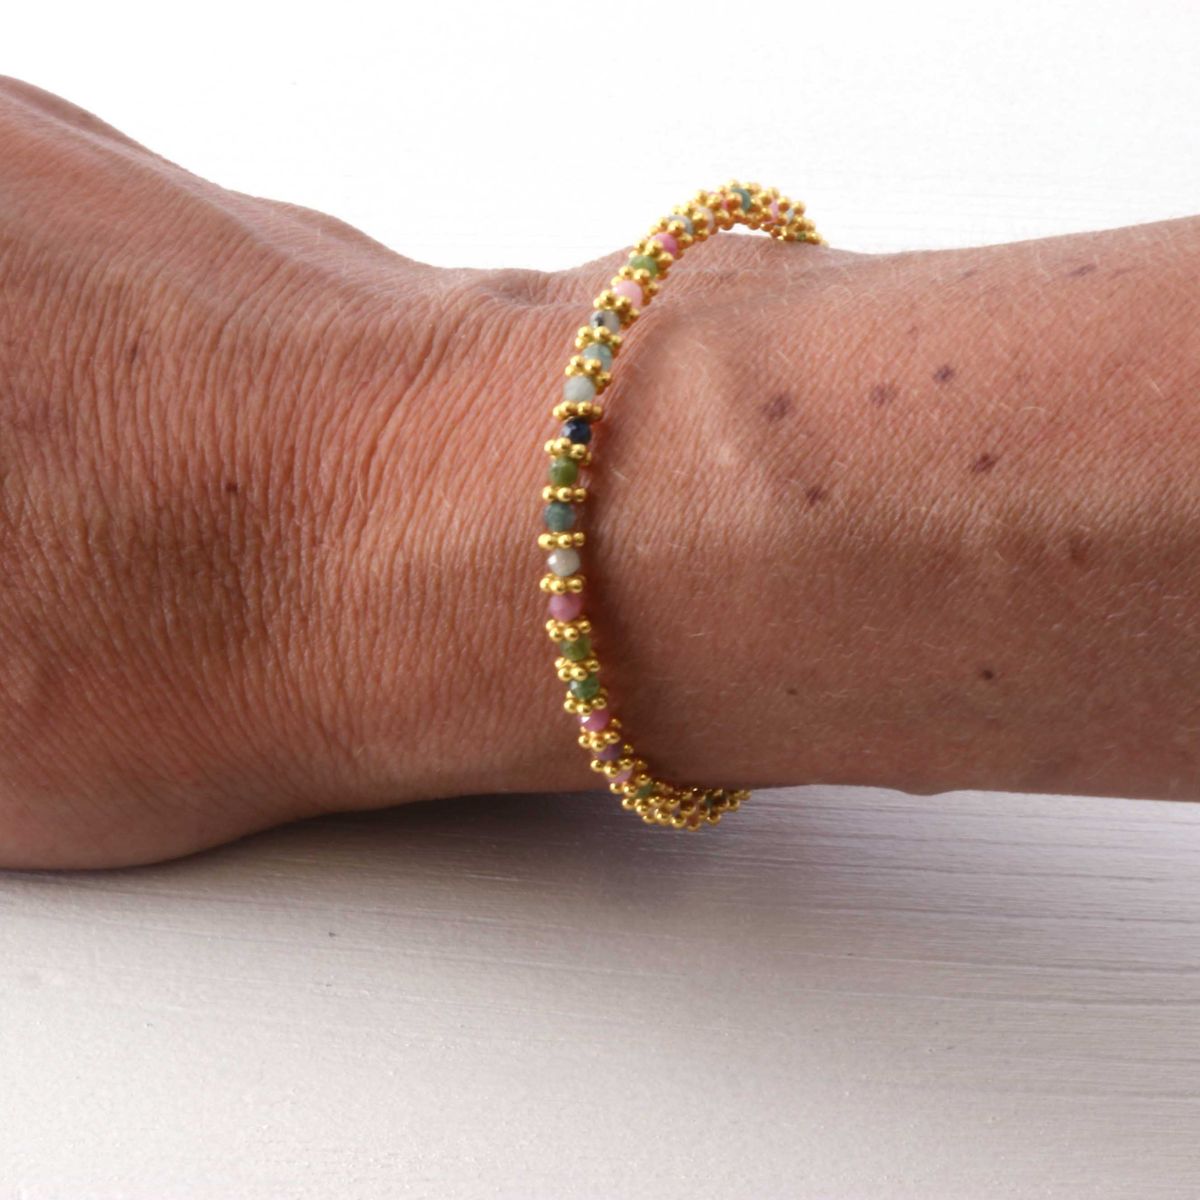 a woman wearing a multi coloured tourmaline bracelet on her wrist